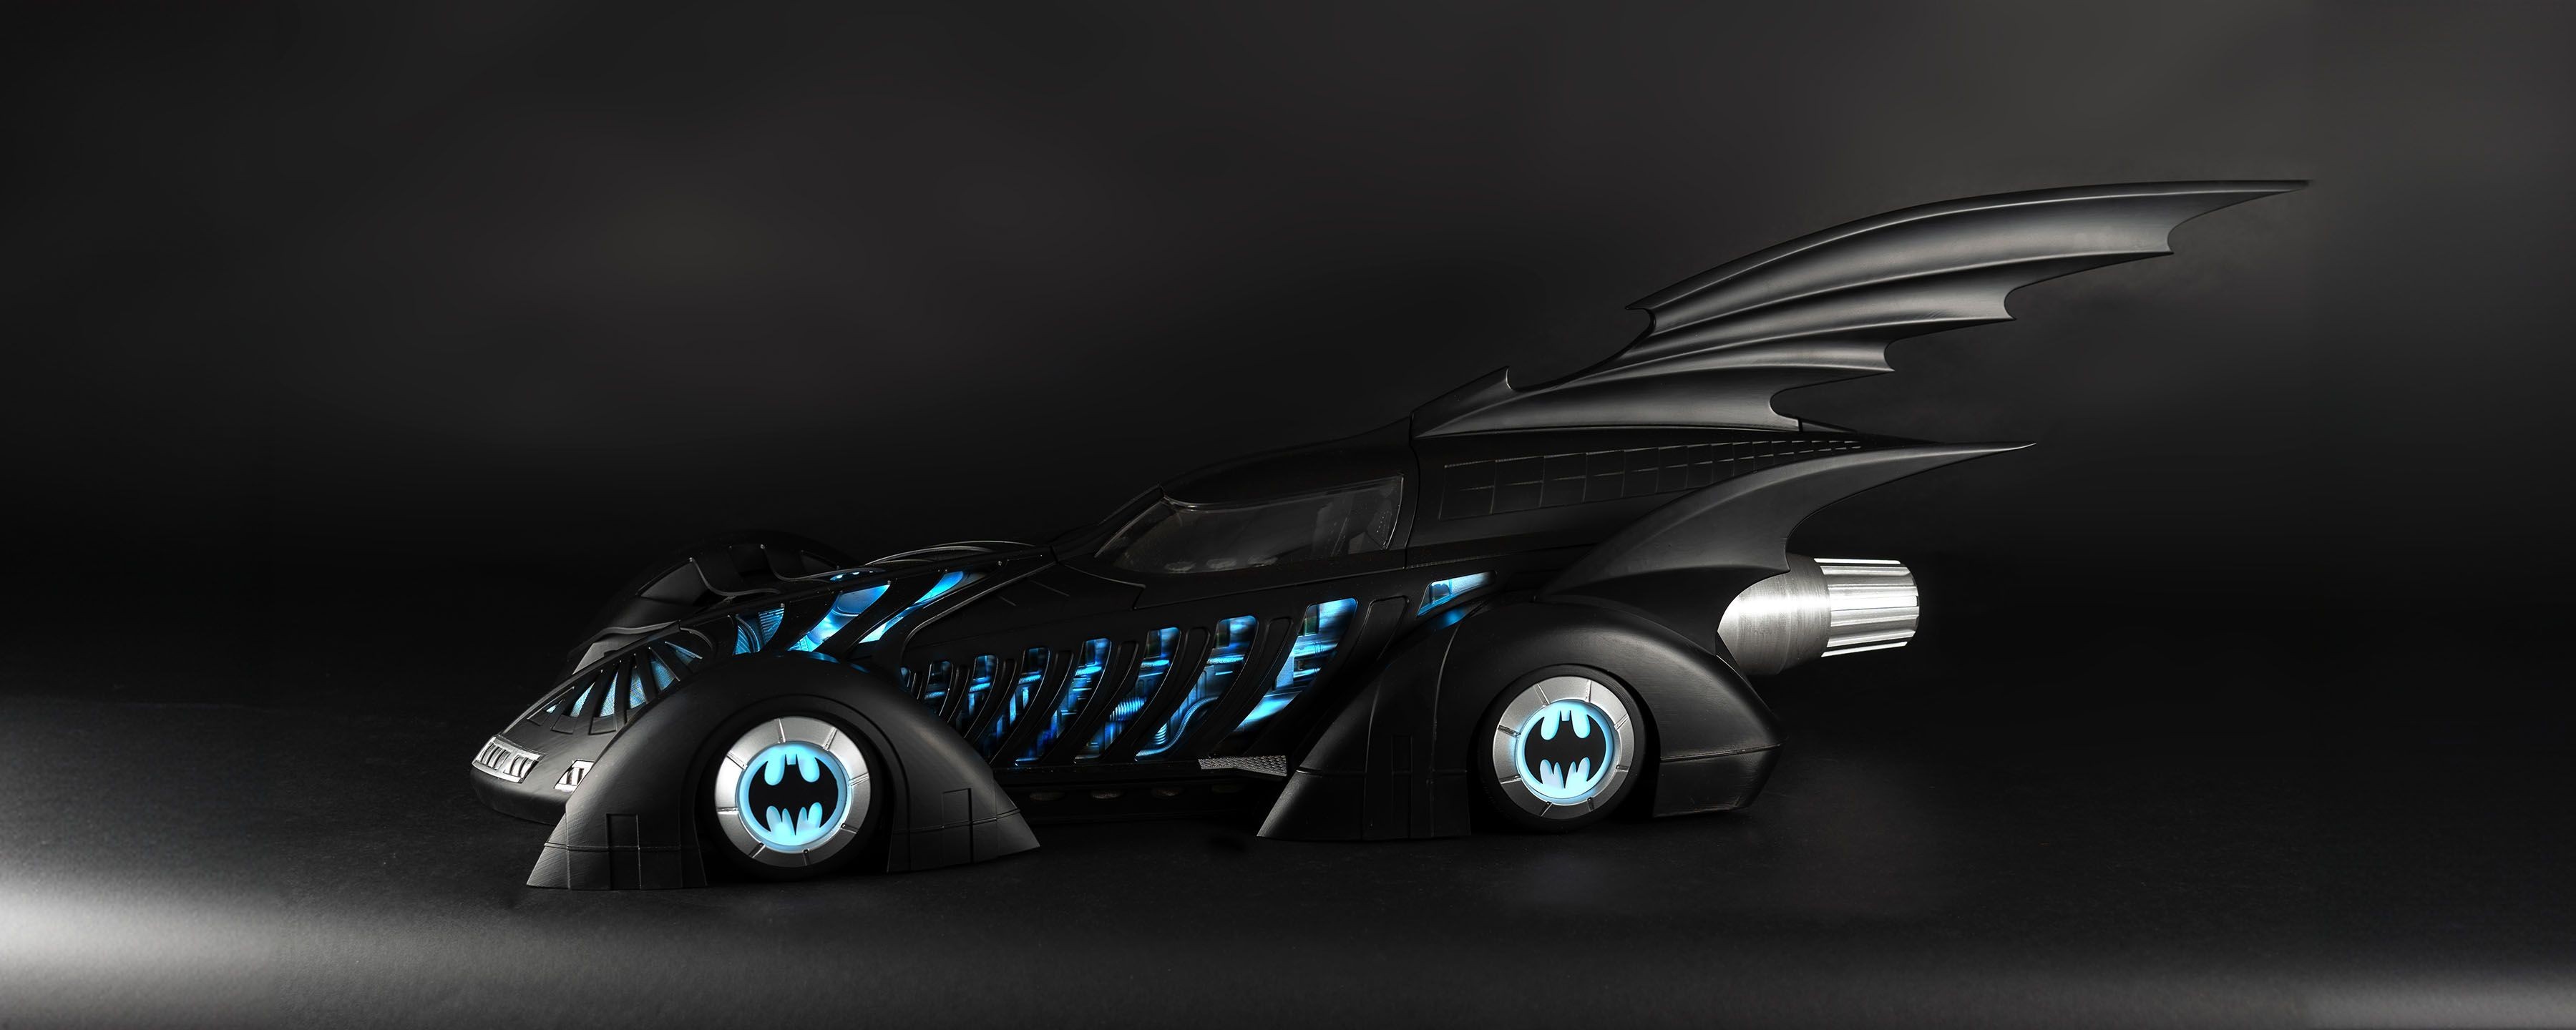 1/6 Batman Forever Batmobile Collectible Vehicle